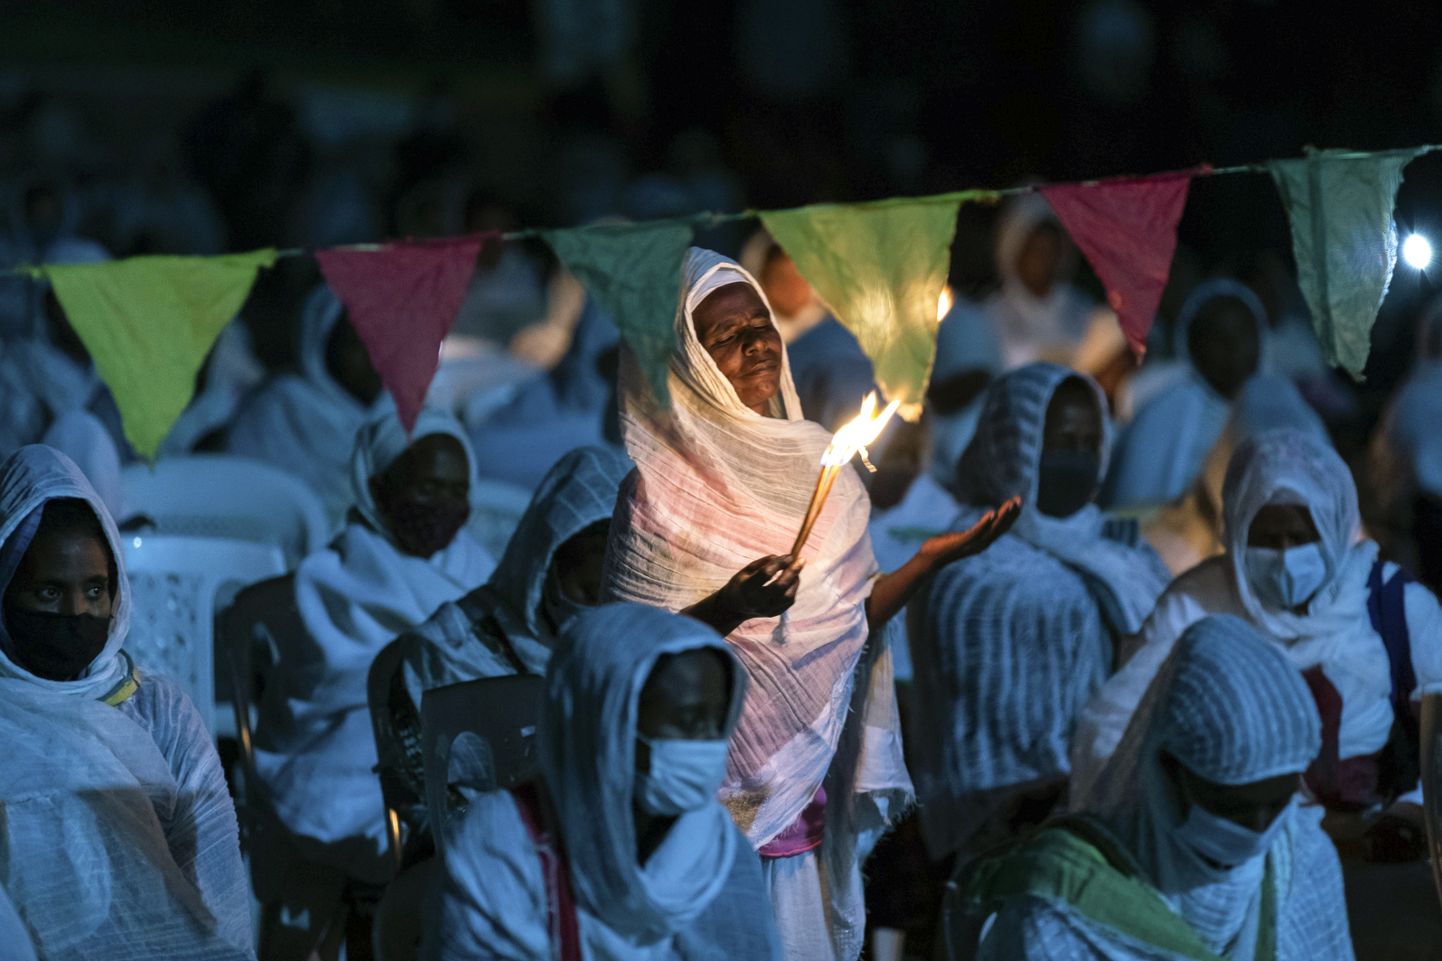 Etiooplased palvetamas.